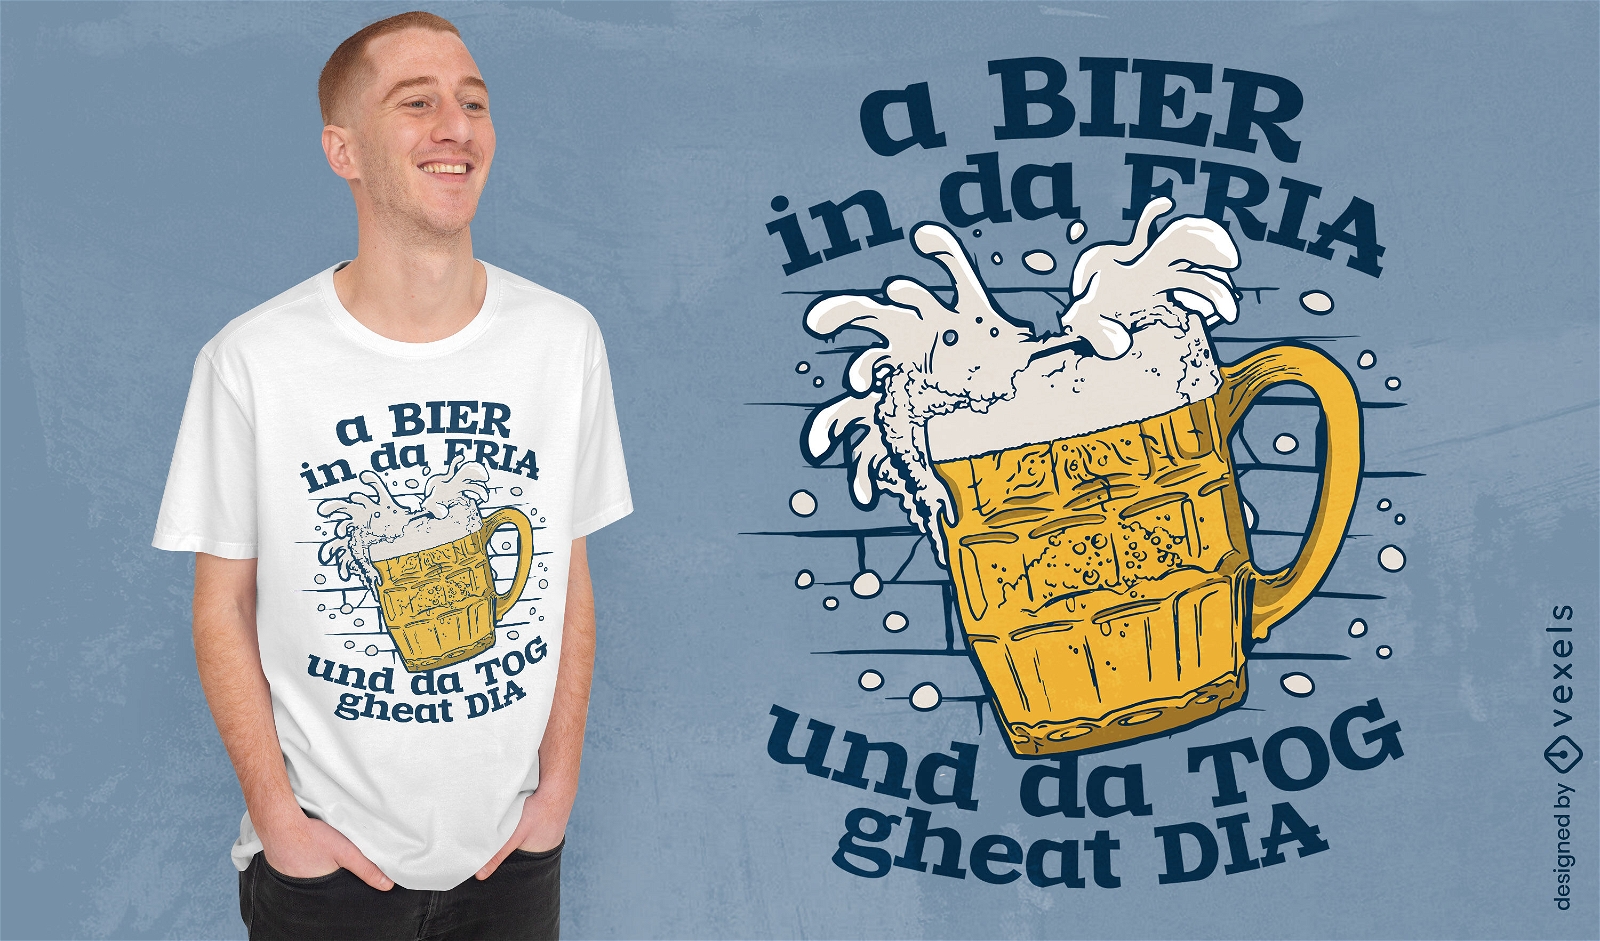 Biergetr?nk ?berlaufendes T-Shirt-Design